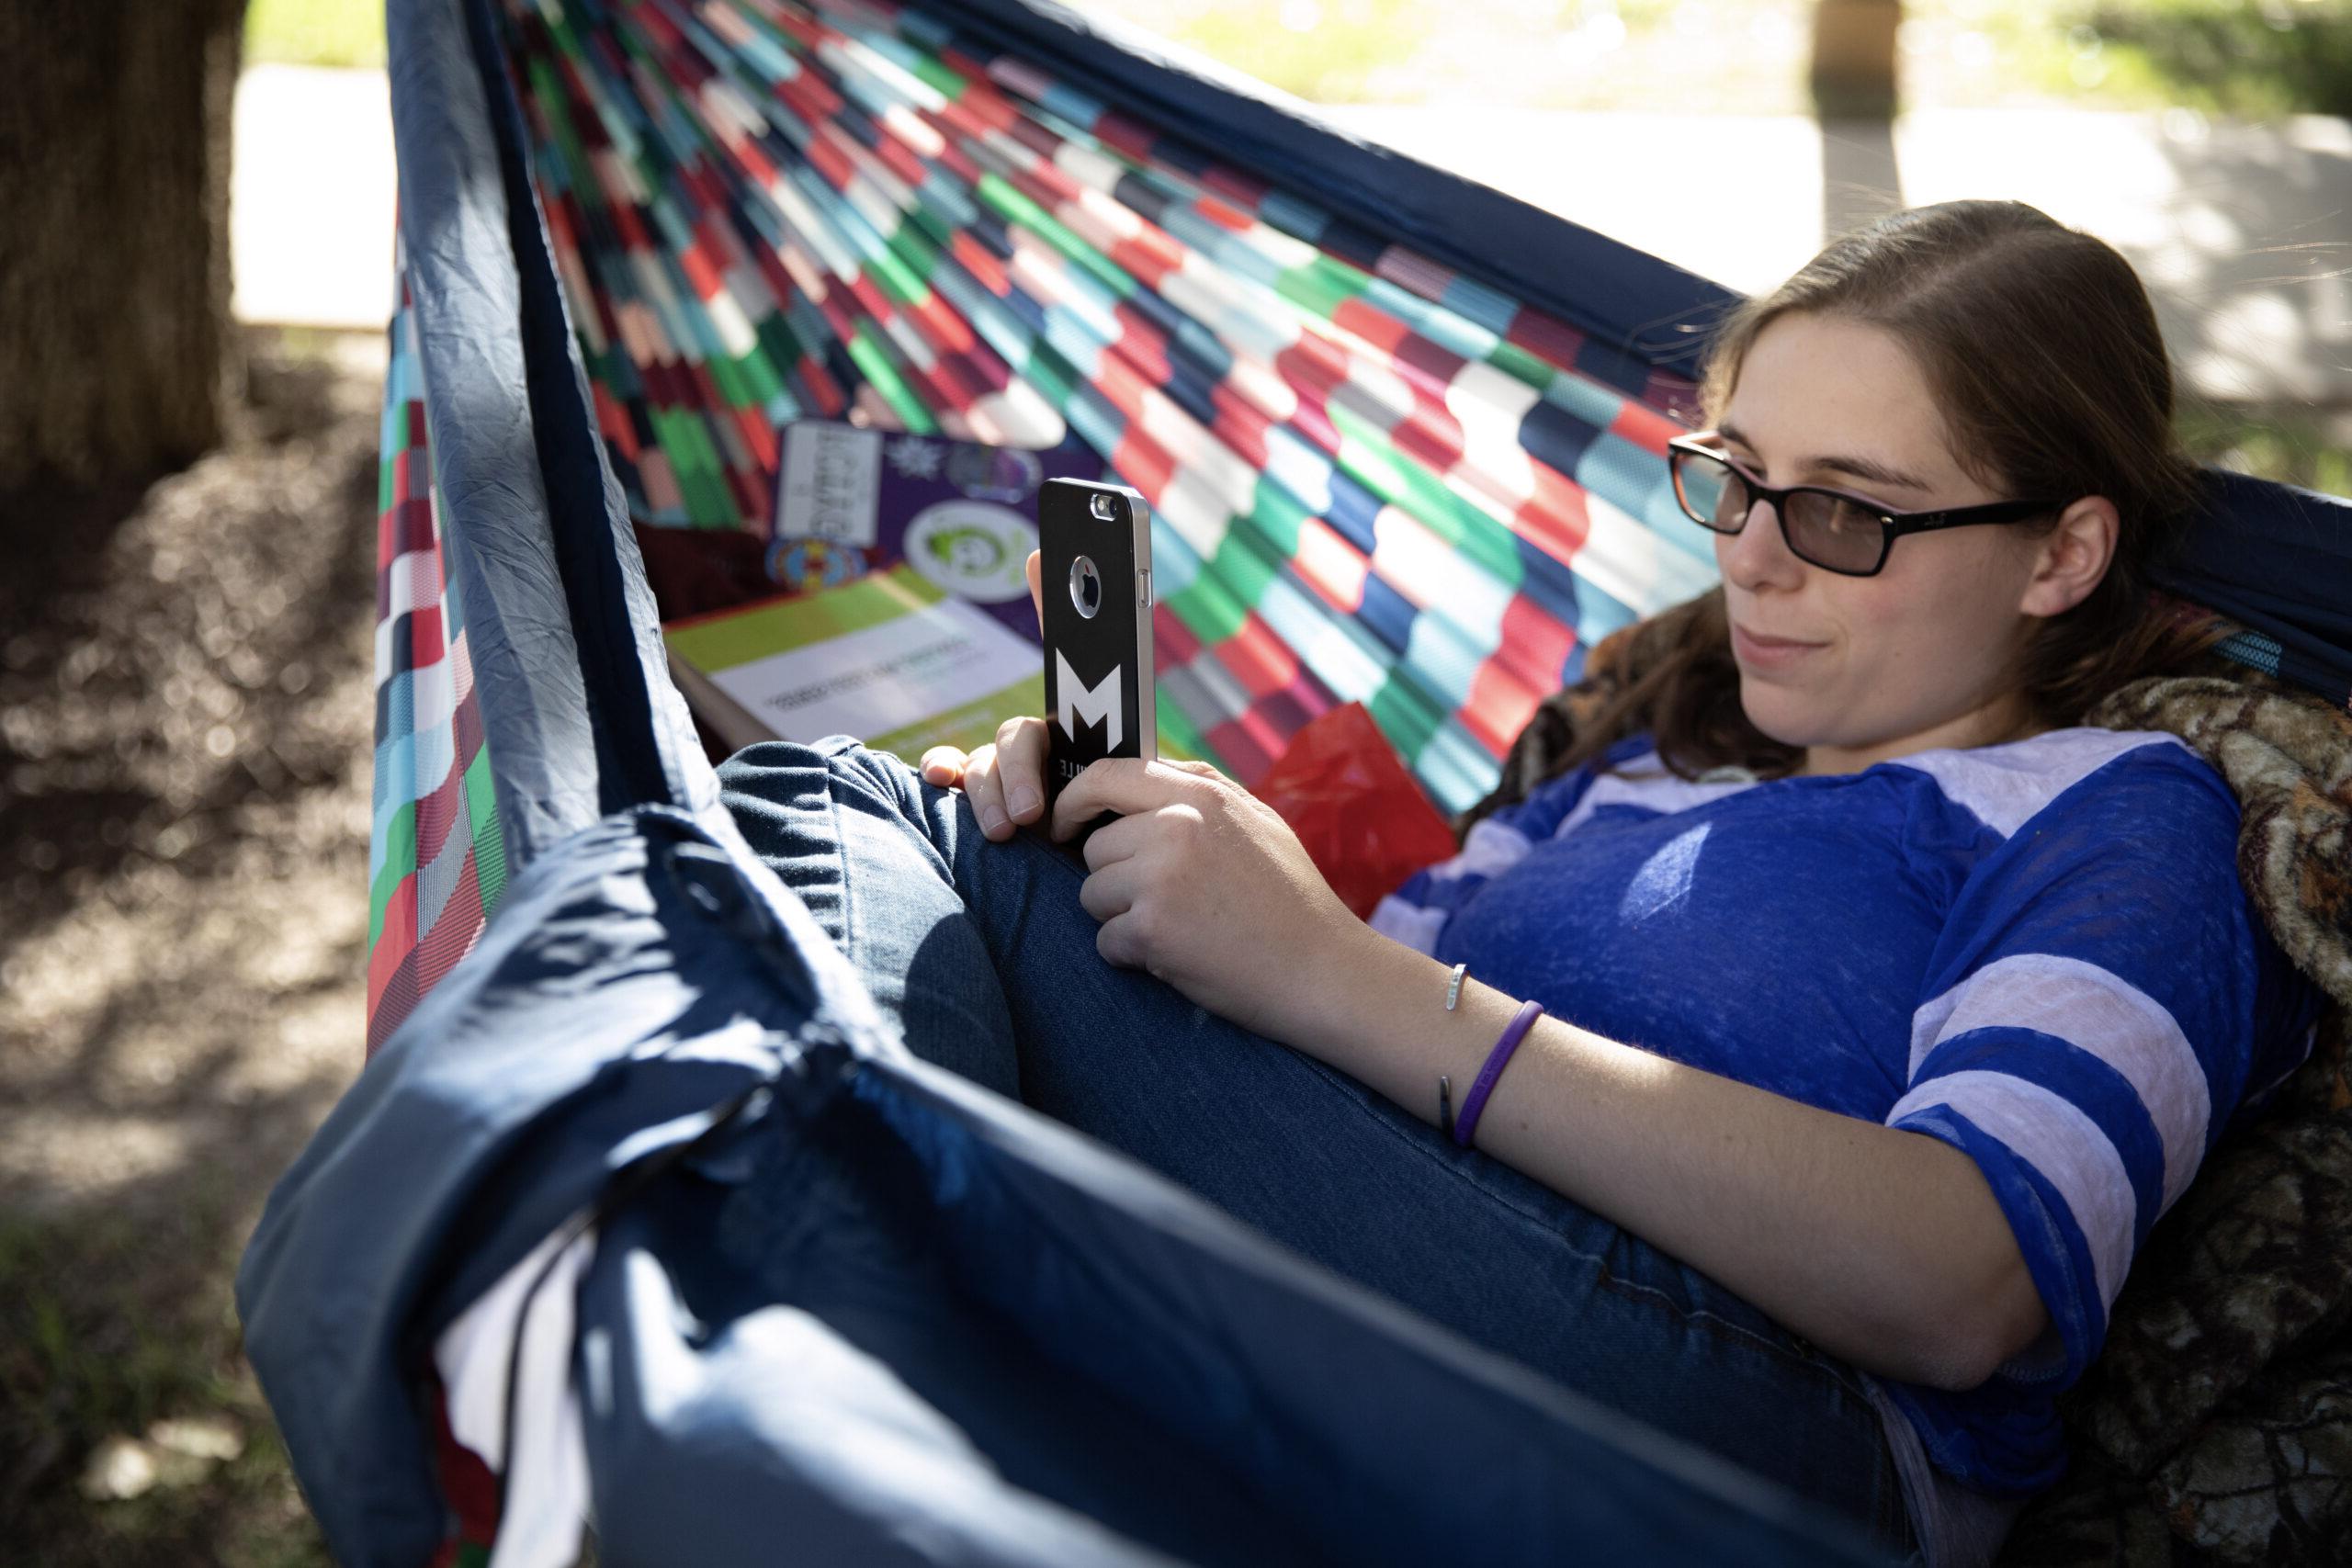 Student relaxing in hammock